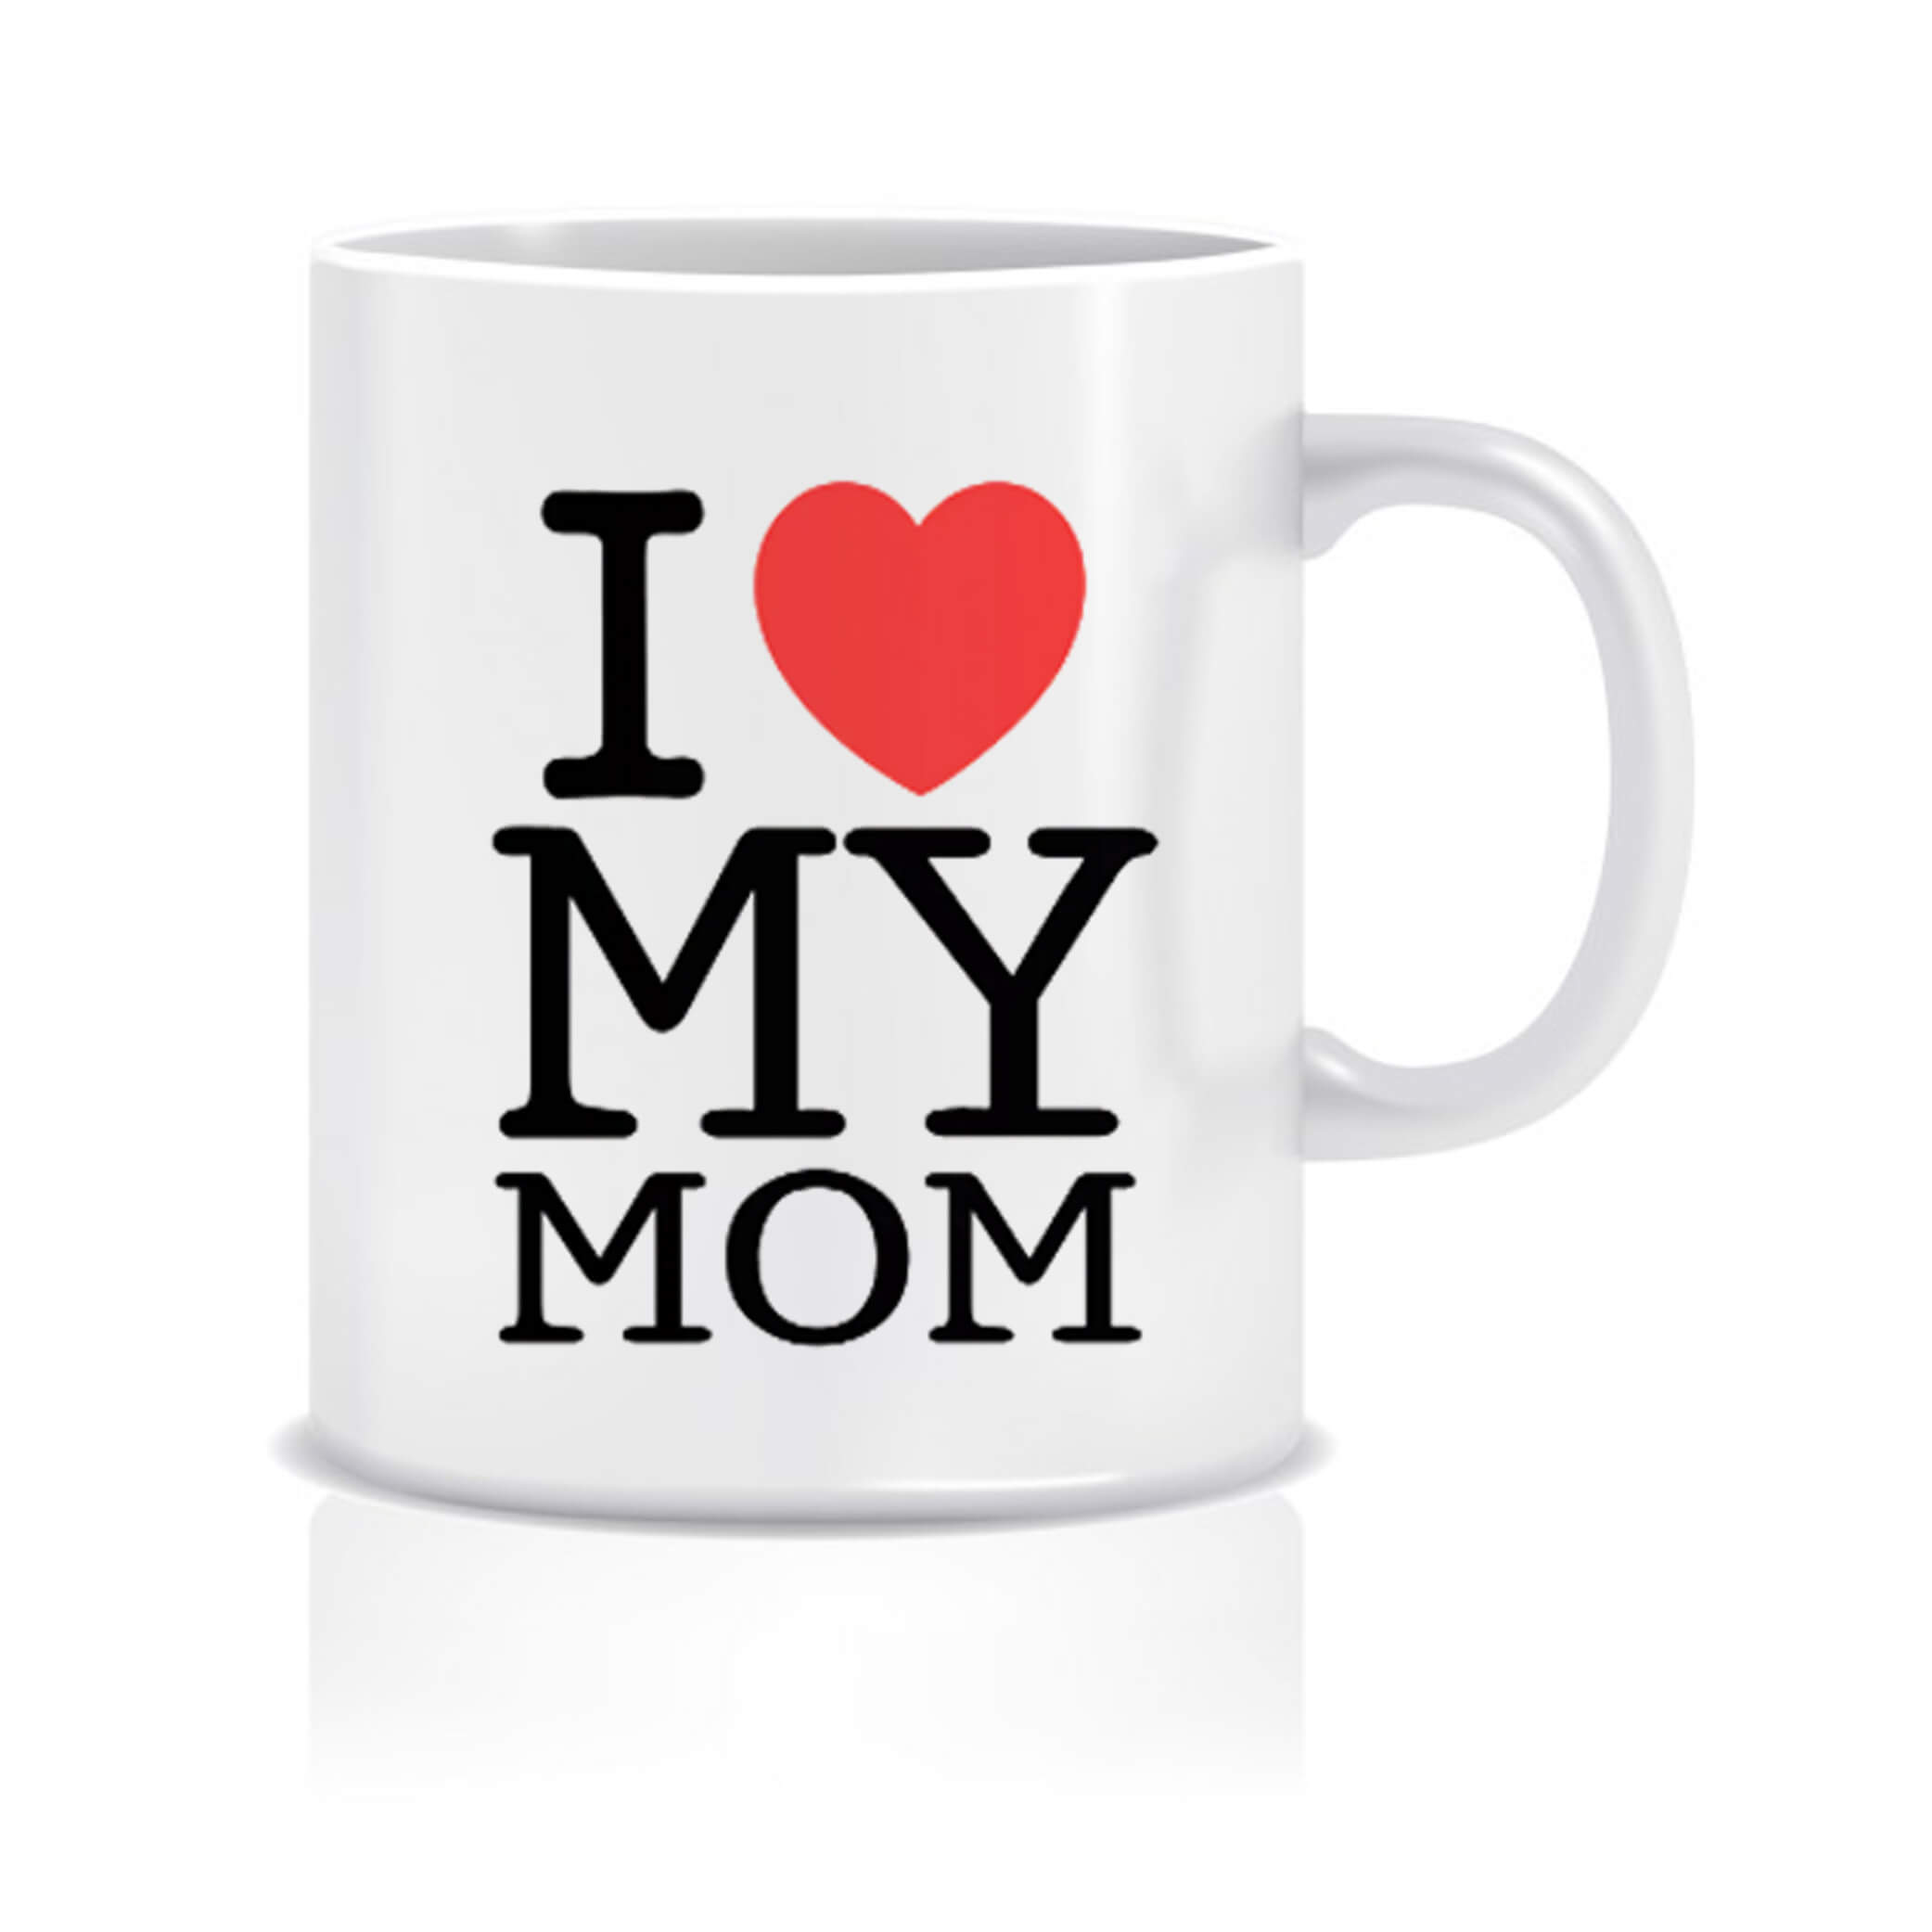 I love you mug for mom 